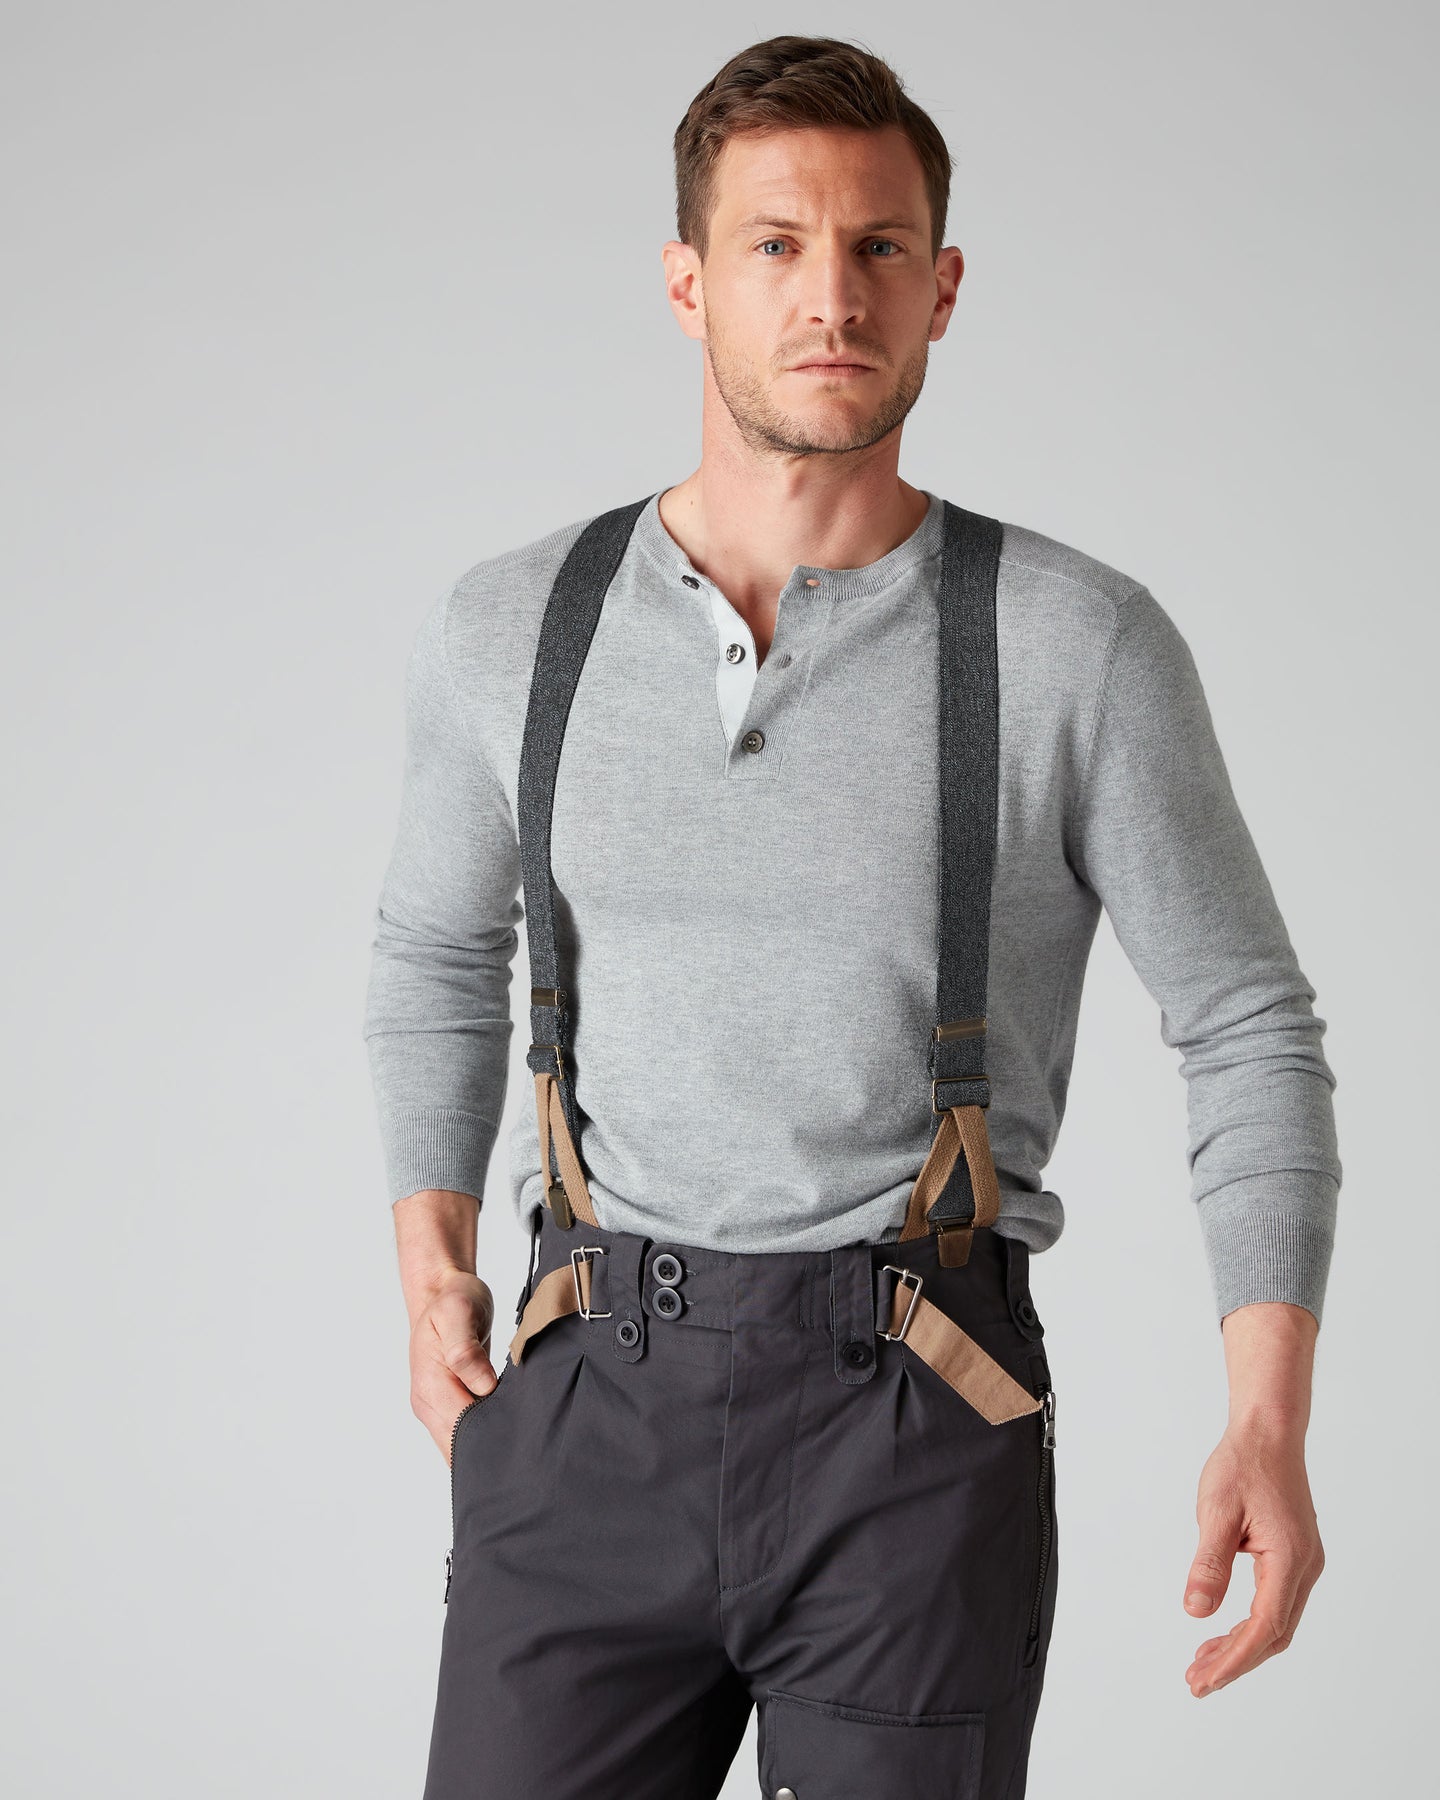 Premium Quality Mens Suspenders Y Back Design Pant Clip Style Tuxedo Braces  Adjustable Solid Straight Clip